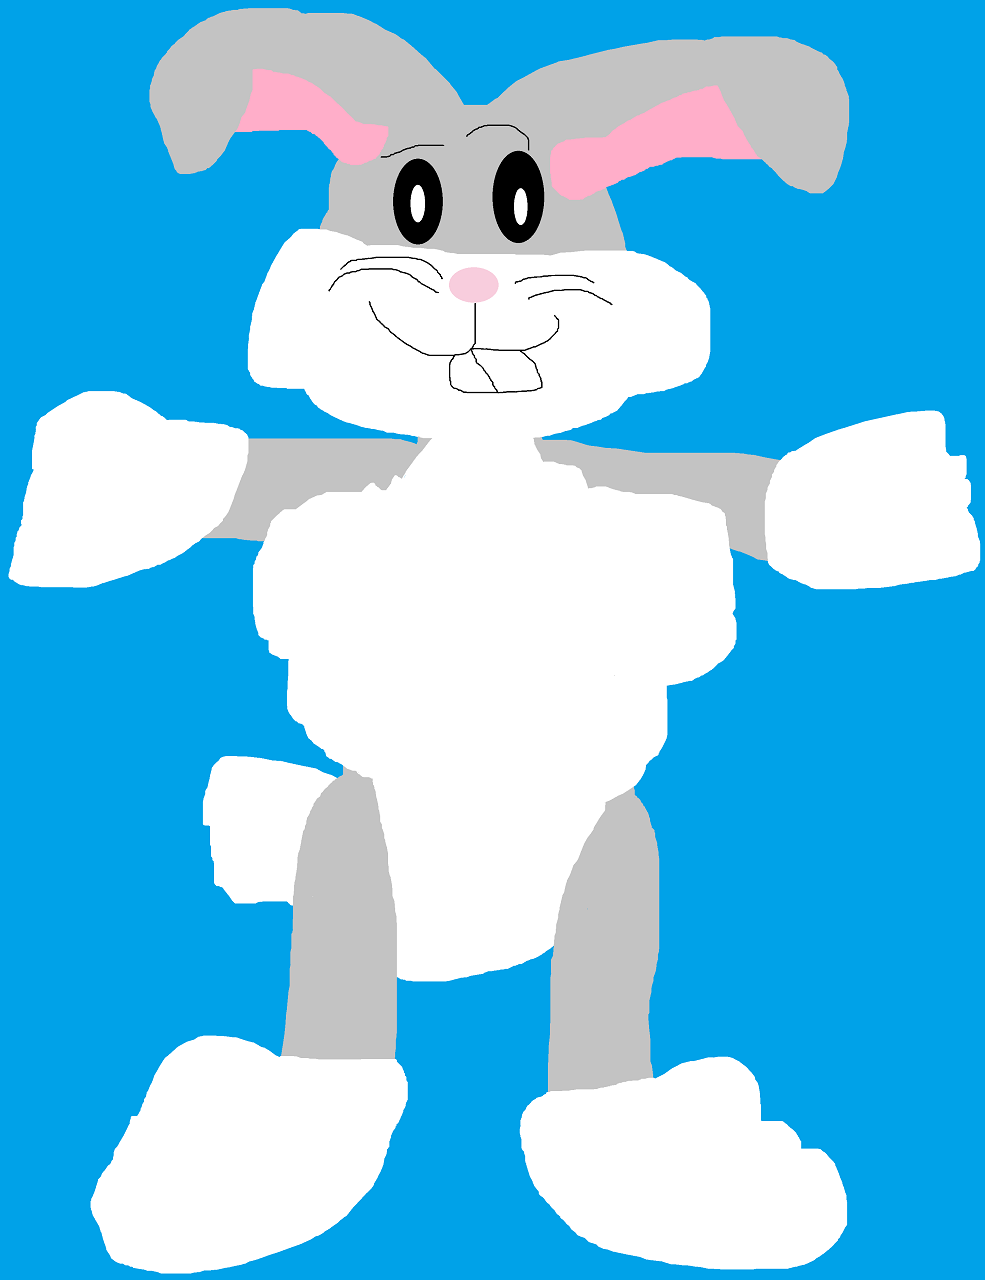 Random Fluffy Bug Bunny Plush by Falconlobo